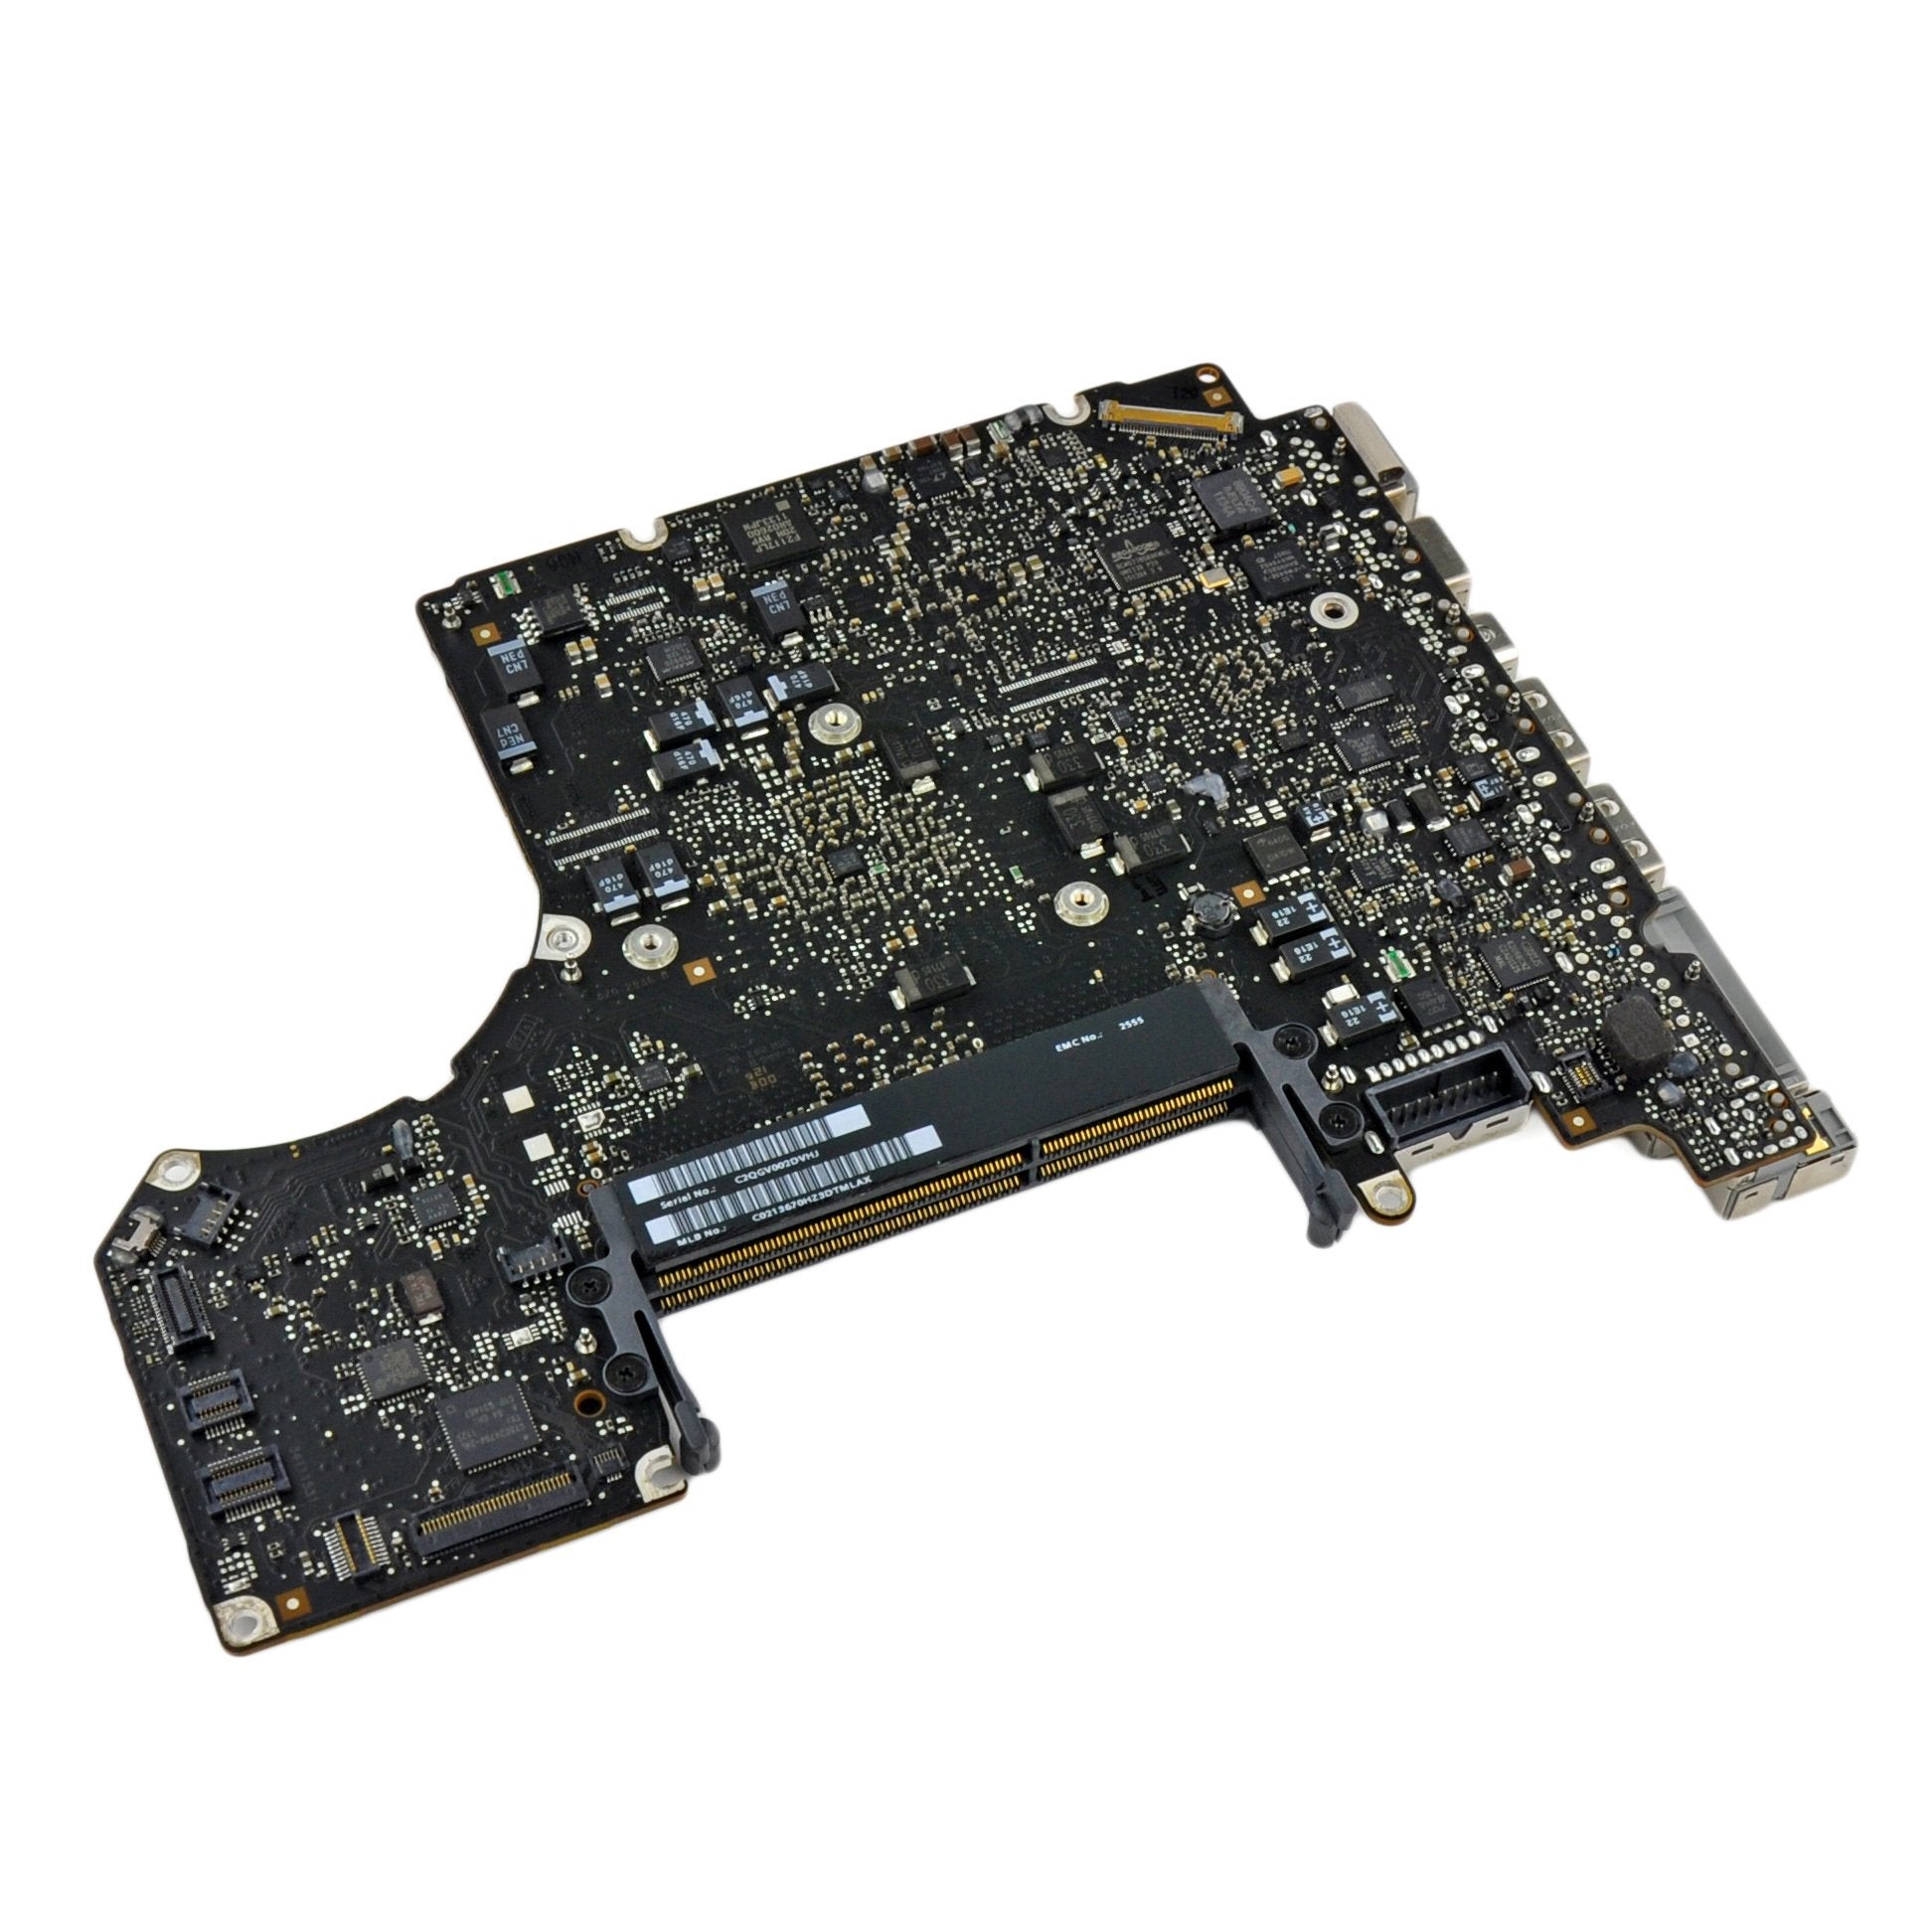 MacBook Pro 13" Unibody (Early 2011-Late 2011) 2.4 GHz Logic Board